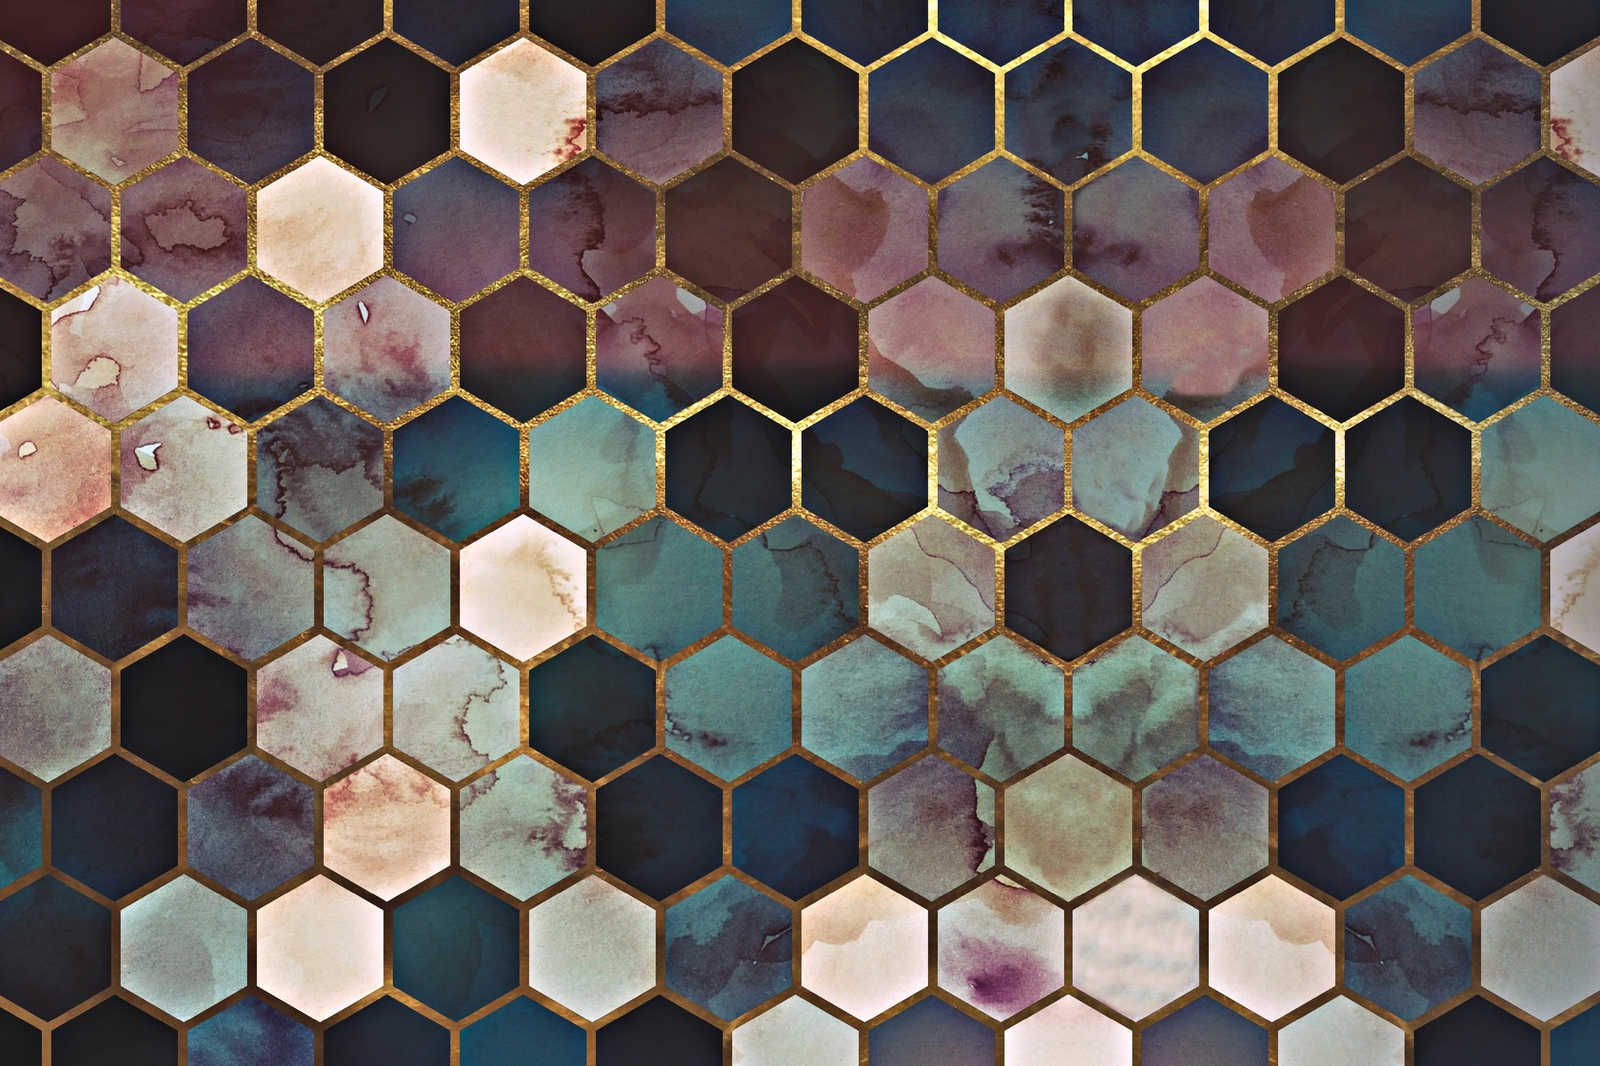             Aquarell Leinwandbild Marmor Design mit Gold Muster – 0,90 m x 0,60 m
        